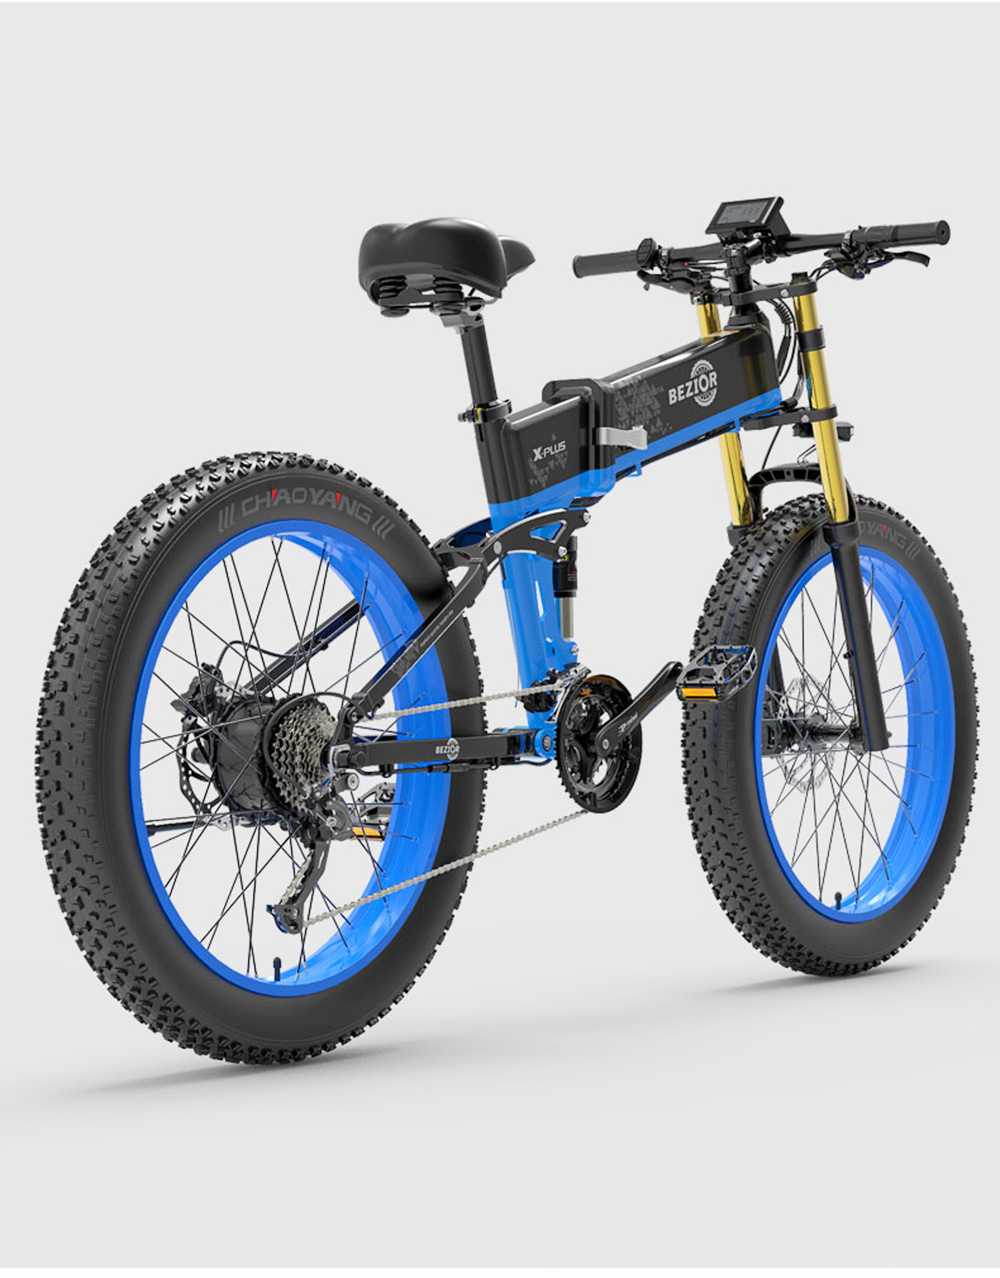 BEZIOR X-PLUS Electric Bike 1500W Motor 48V 17.5Ah Battery 26*4.0 Tire Mountain Bike 40 km/h Max Speed 200kg Load - Red